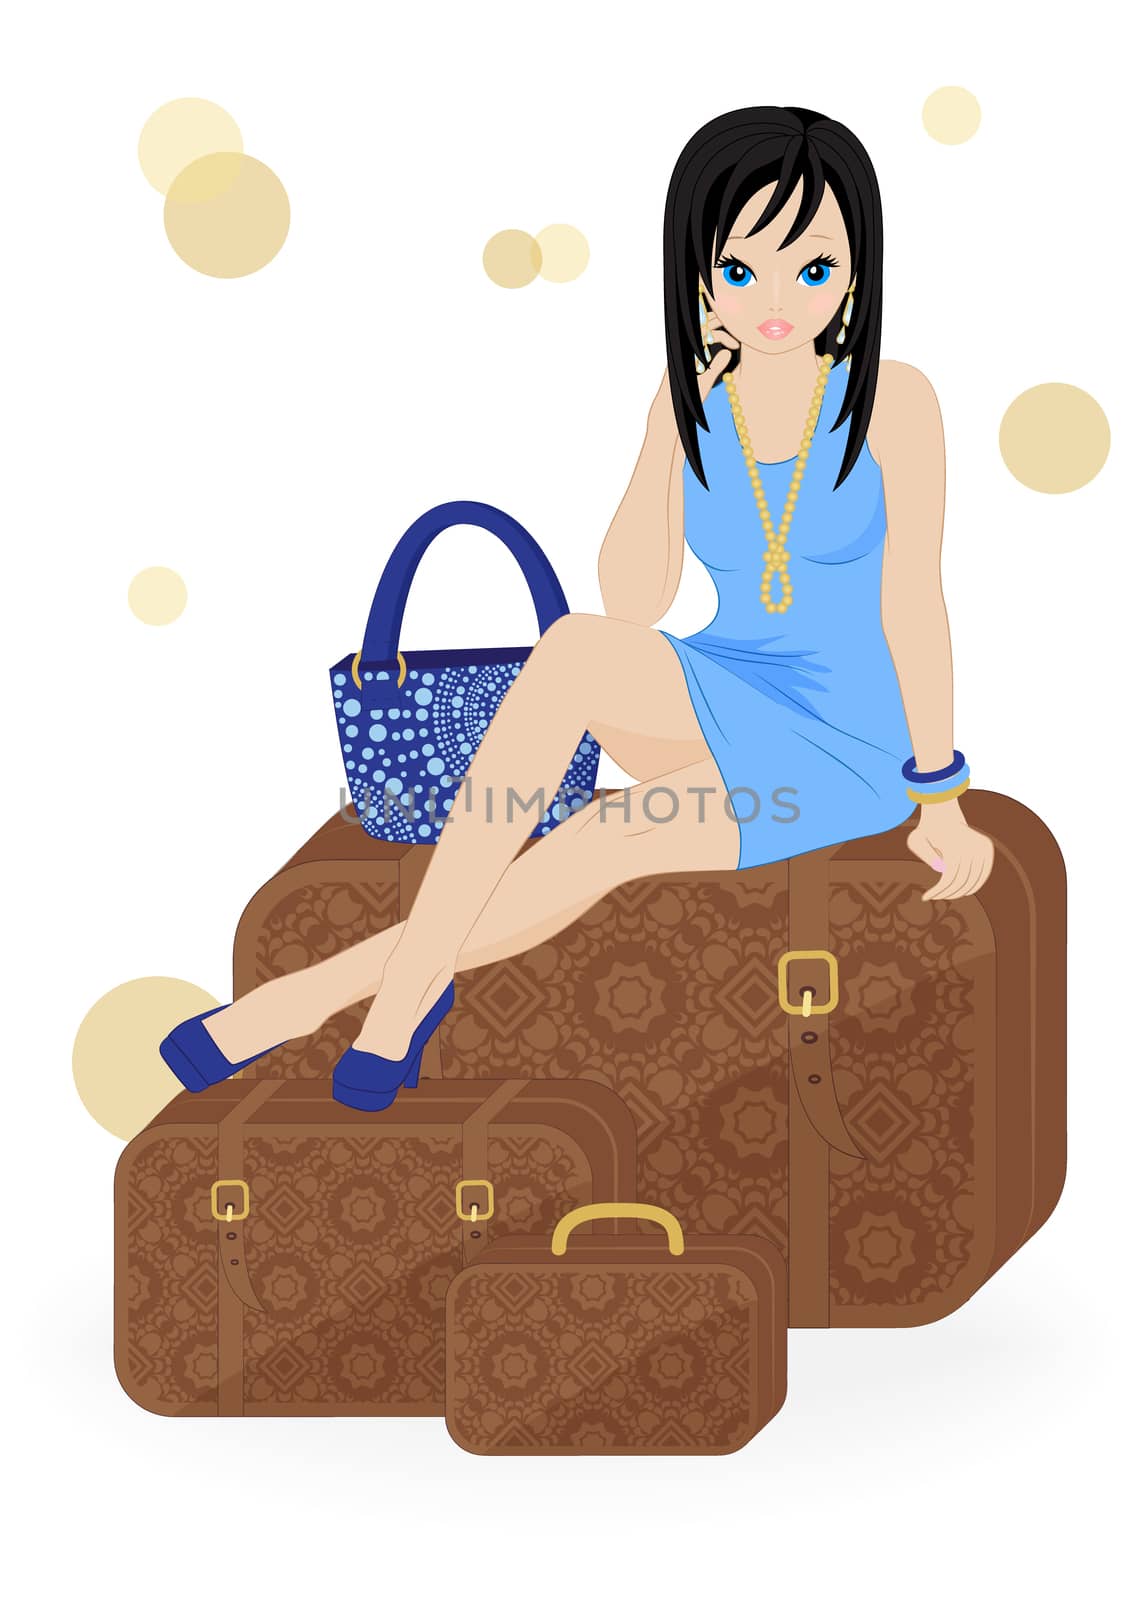 girl traveler sitting on a suitcase isolated on white background